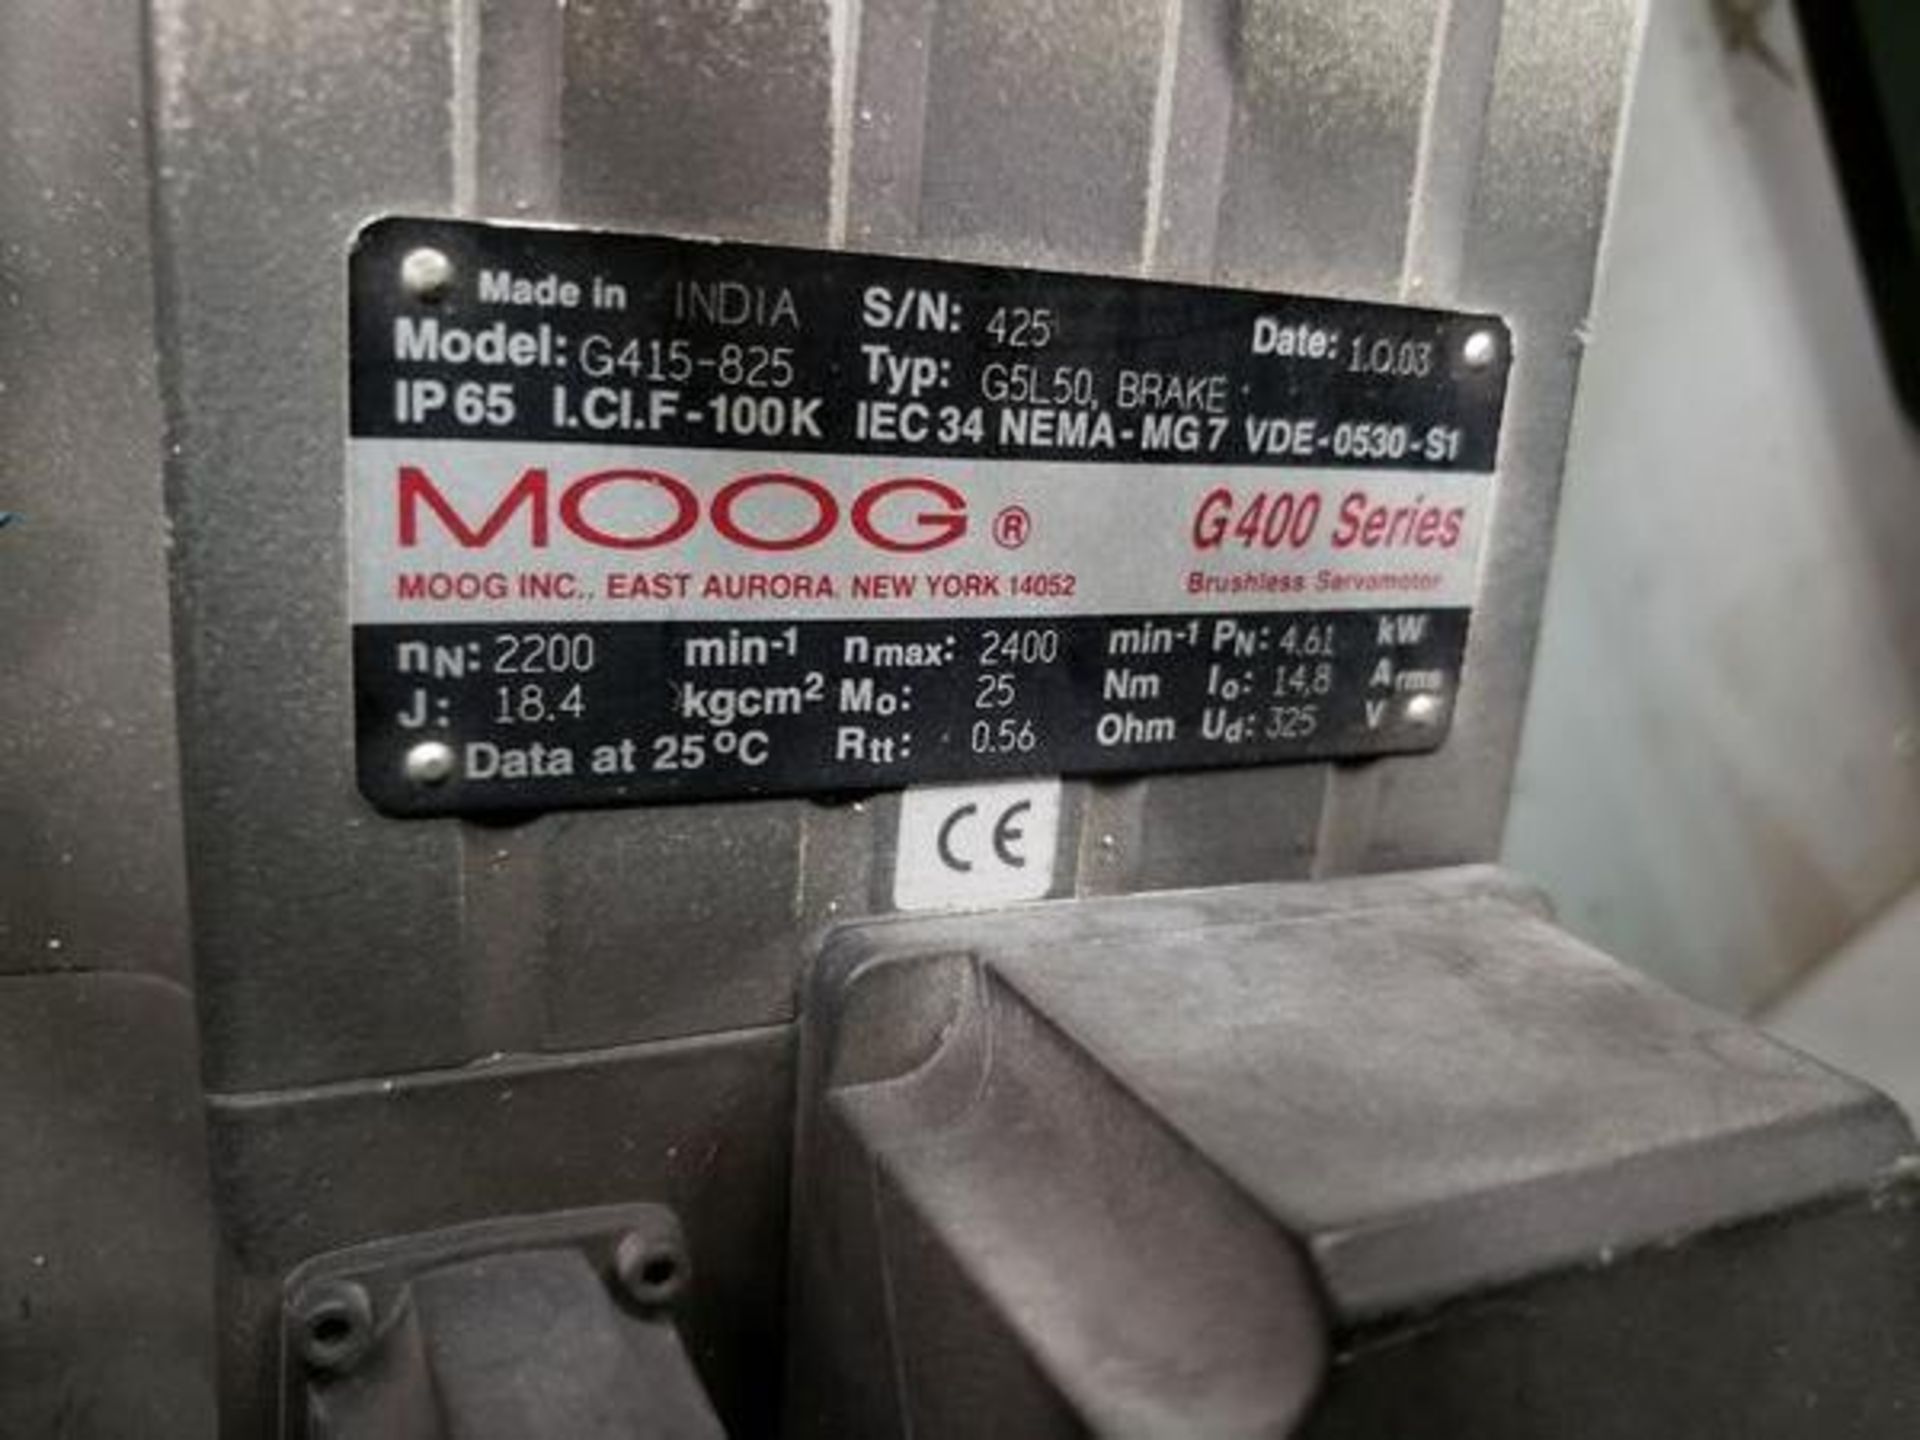 MOOG SERVO MOTOR G400 SERIES G415-825 - Image 2 of 2